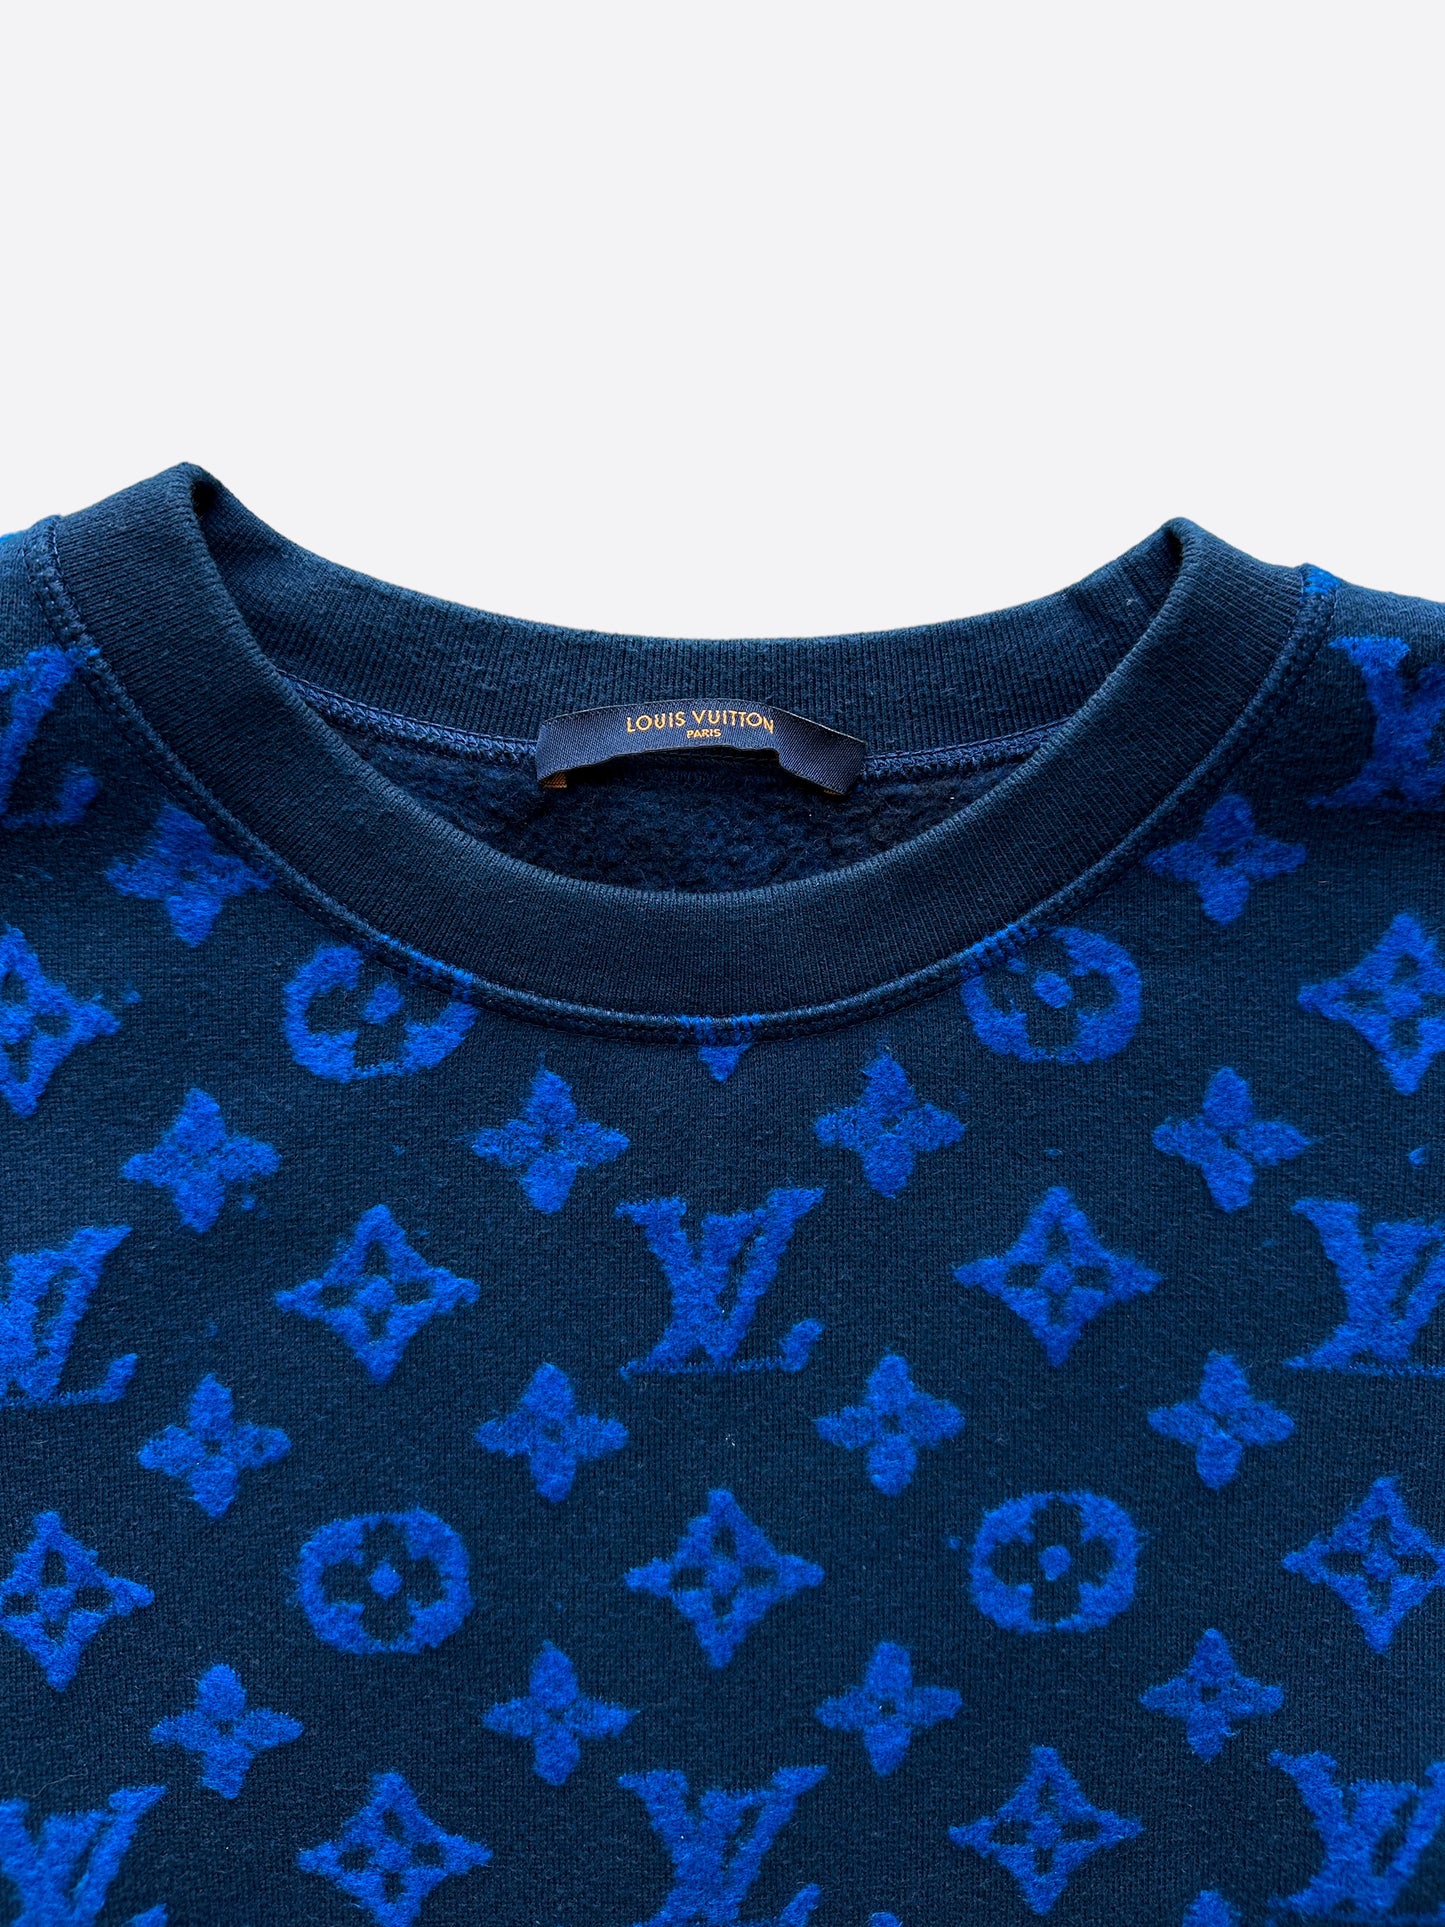 Louis Vuitton Jacquard Monogram Sweater for Sale in San